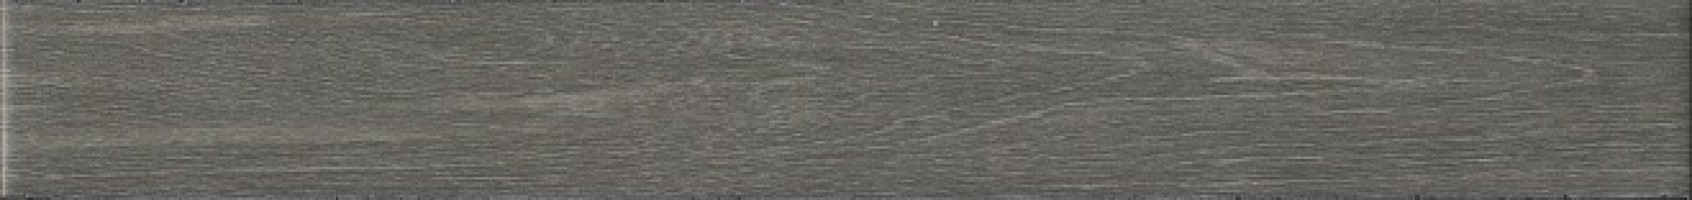 Кассетоне серый матовый 30.2x3.5 VT/C368/SG9174